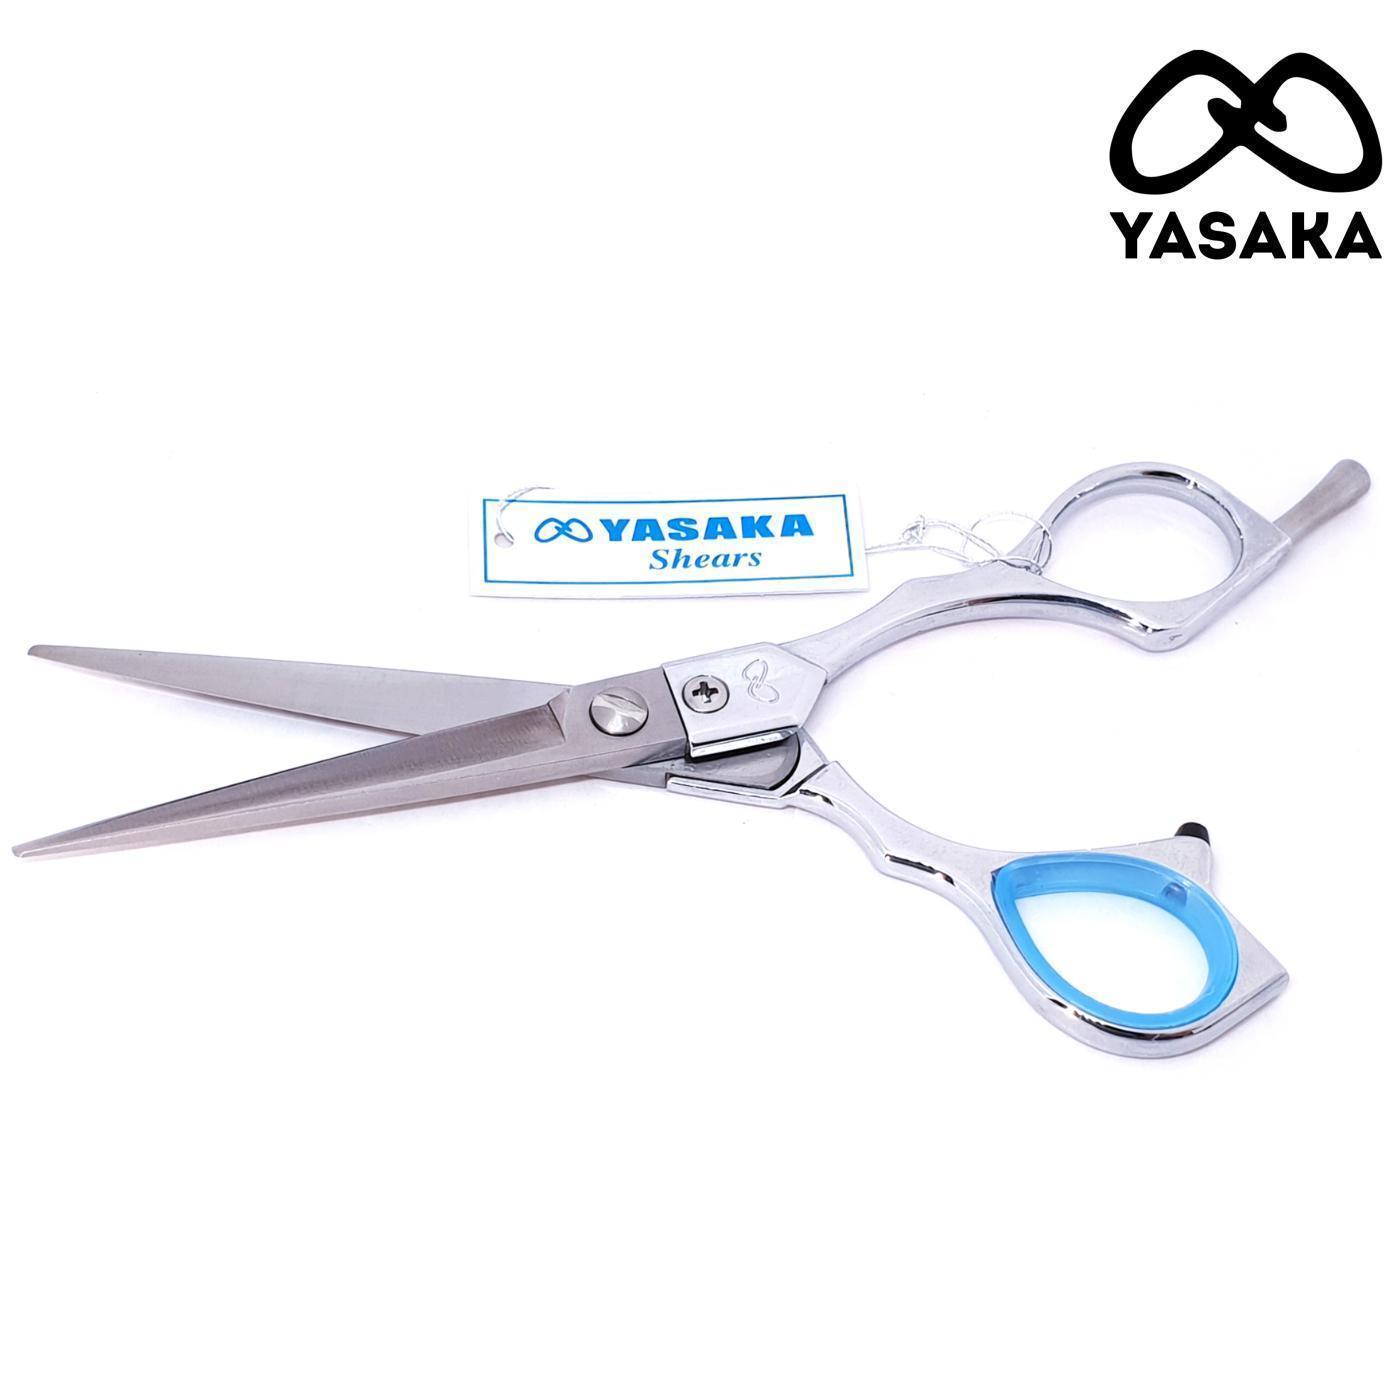 The Yasaka Offset Apprentice Hairdressing Scissor